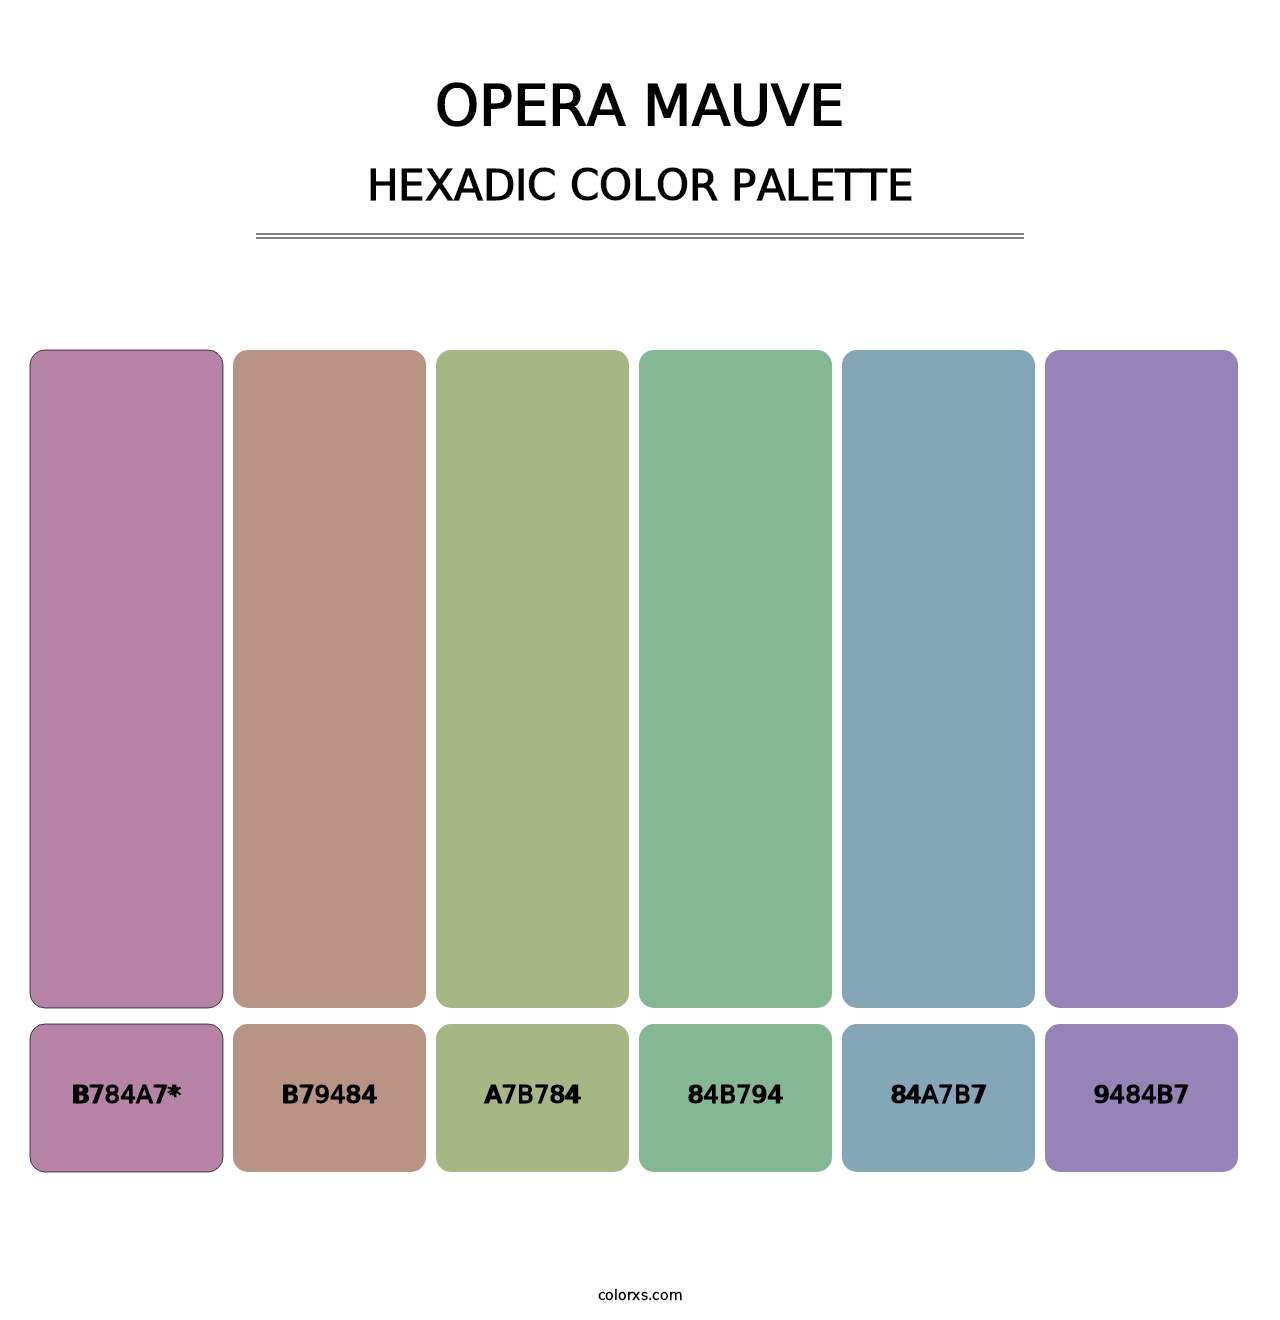 Opera Mauve - Hexadic Color Palette